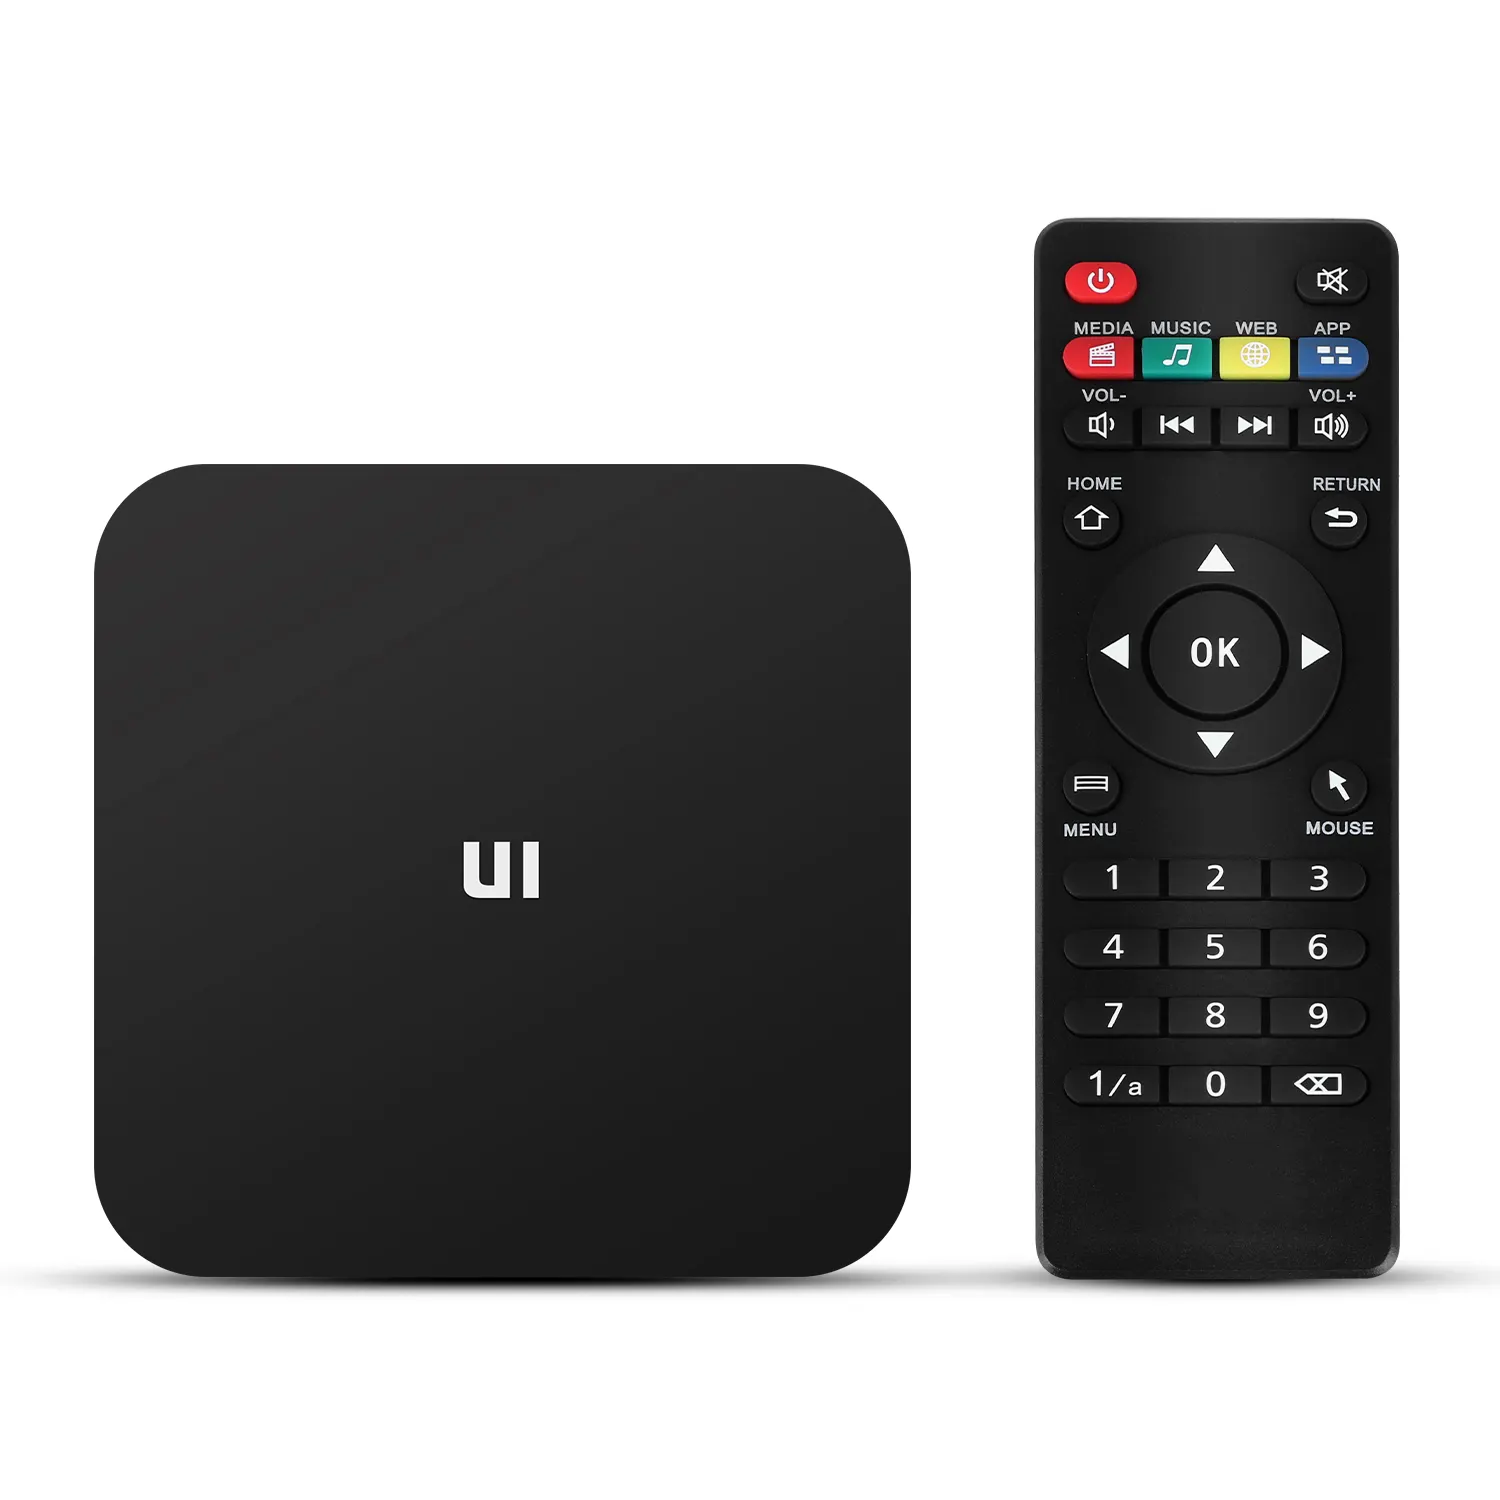 Junuo U1 Tv Box Pintar Android 4K, Tvbox S905w Internet